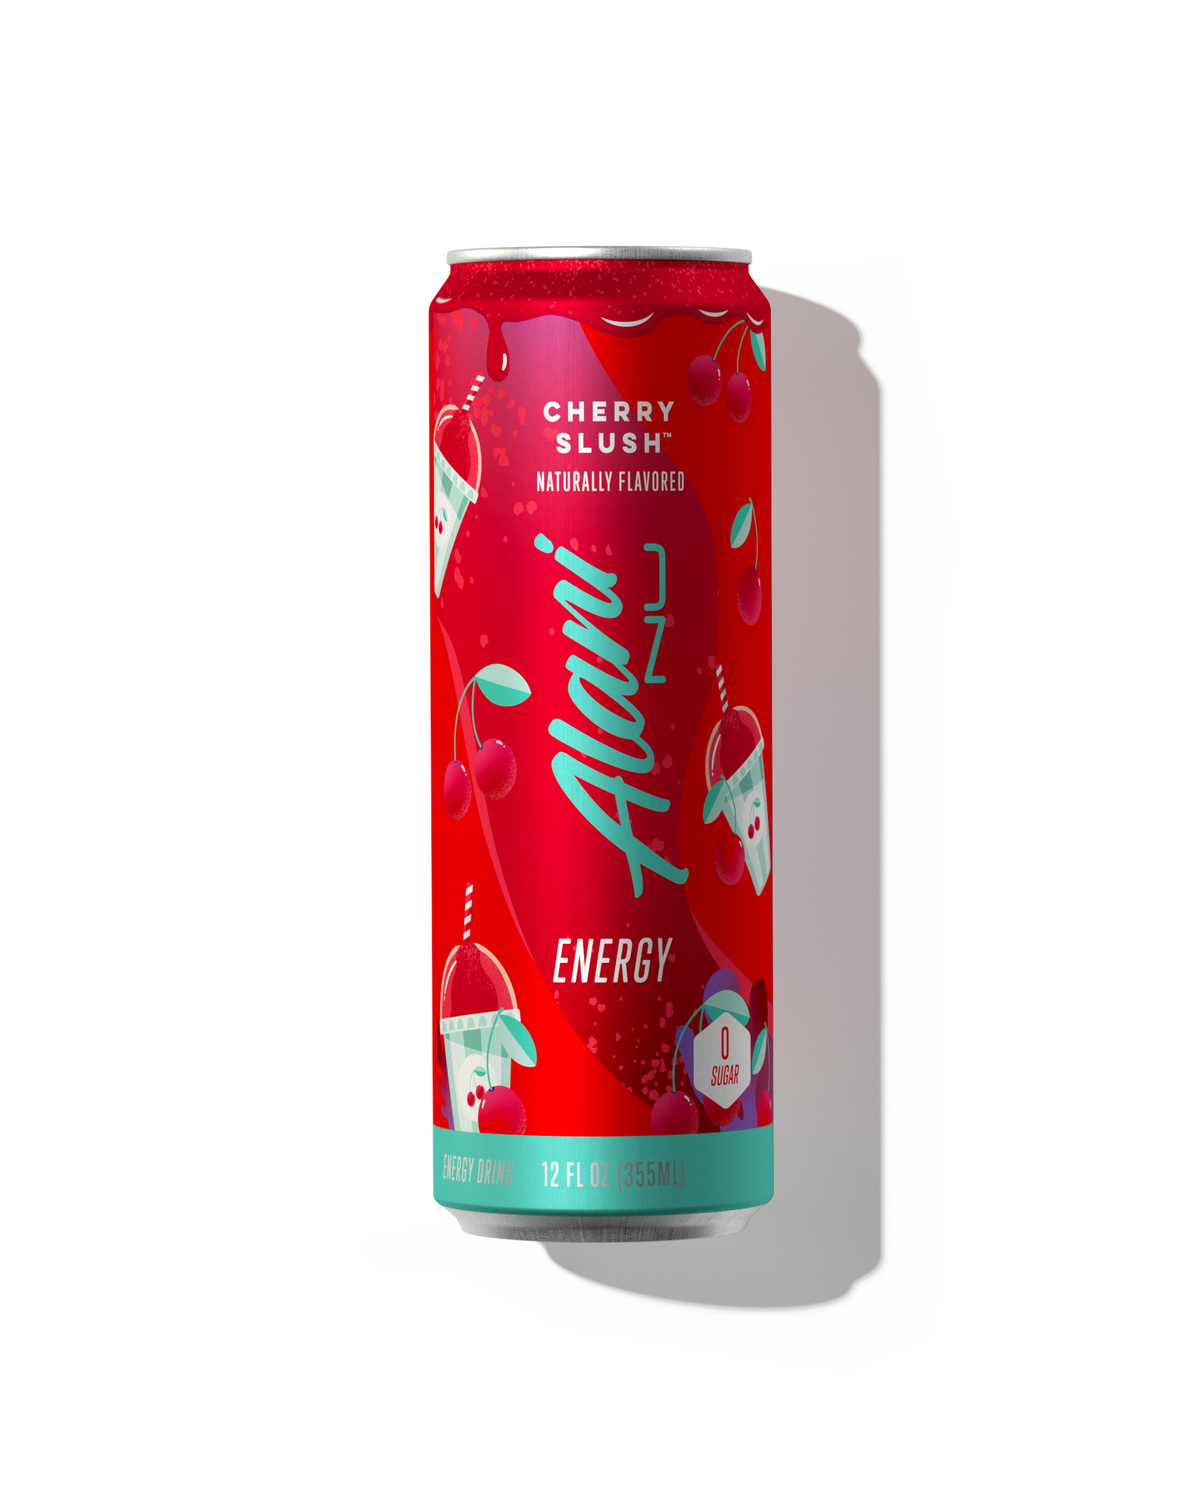 7-UP Cherry Soft Drink, 12 Fl Oz (Pack of 24)